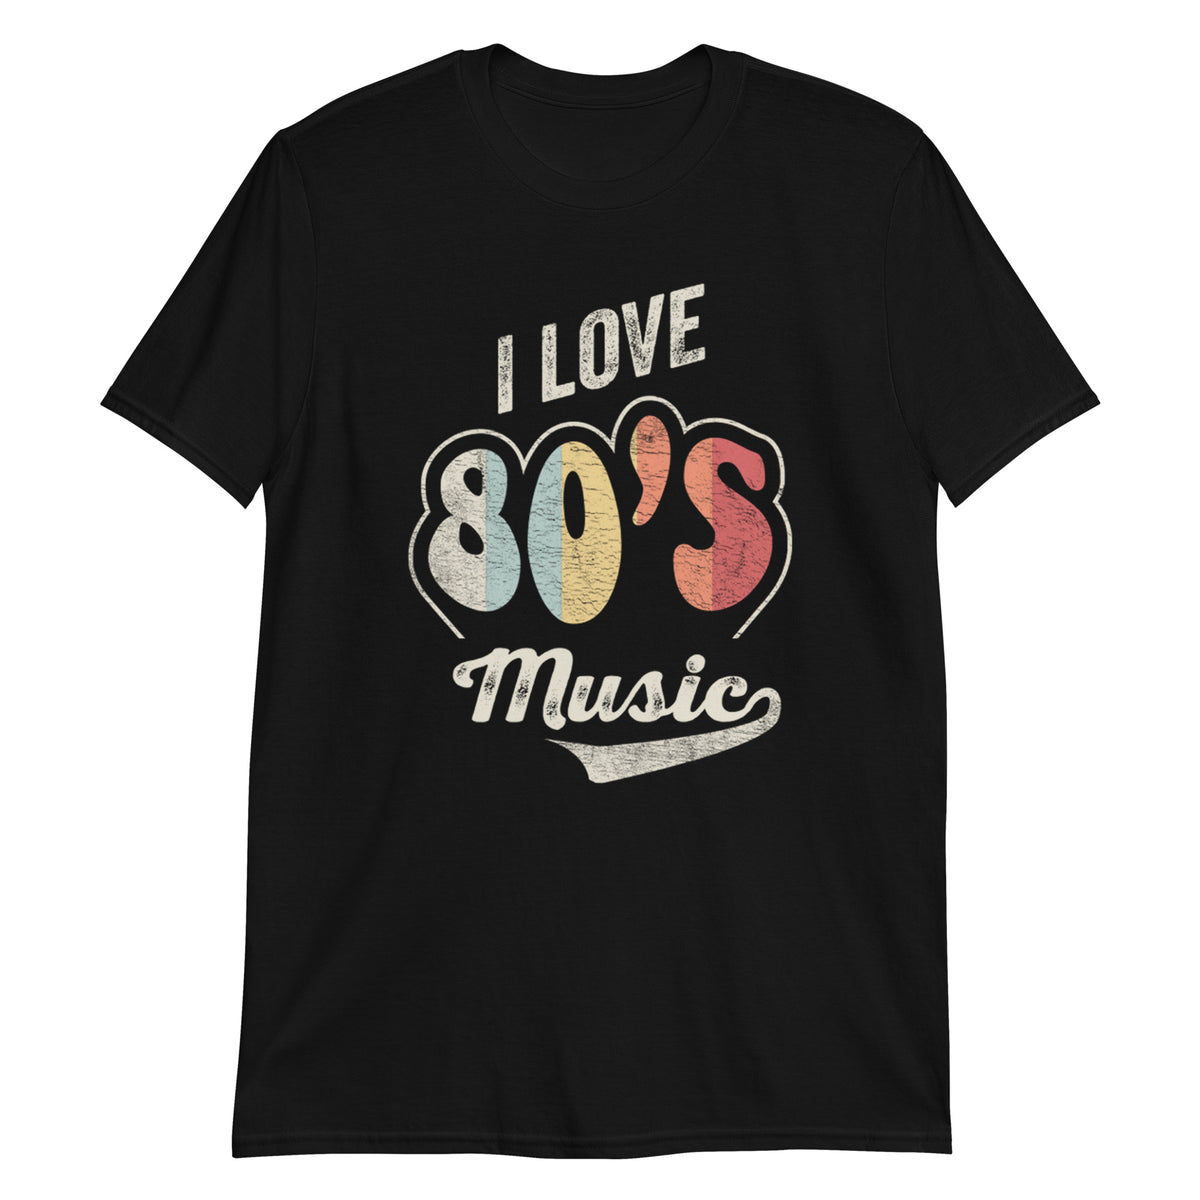 I Love 80's Music T-Shirt